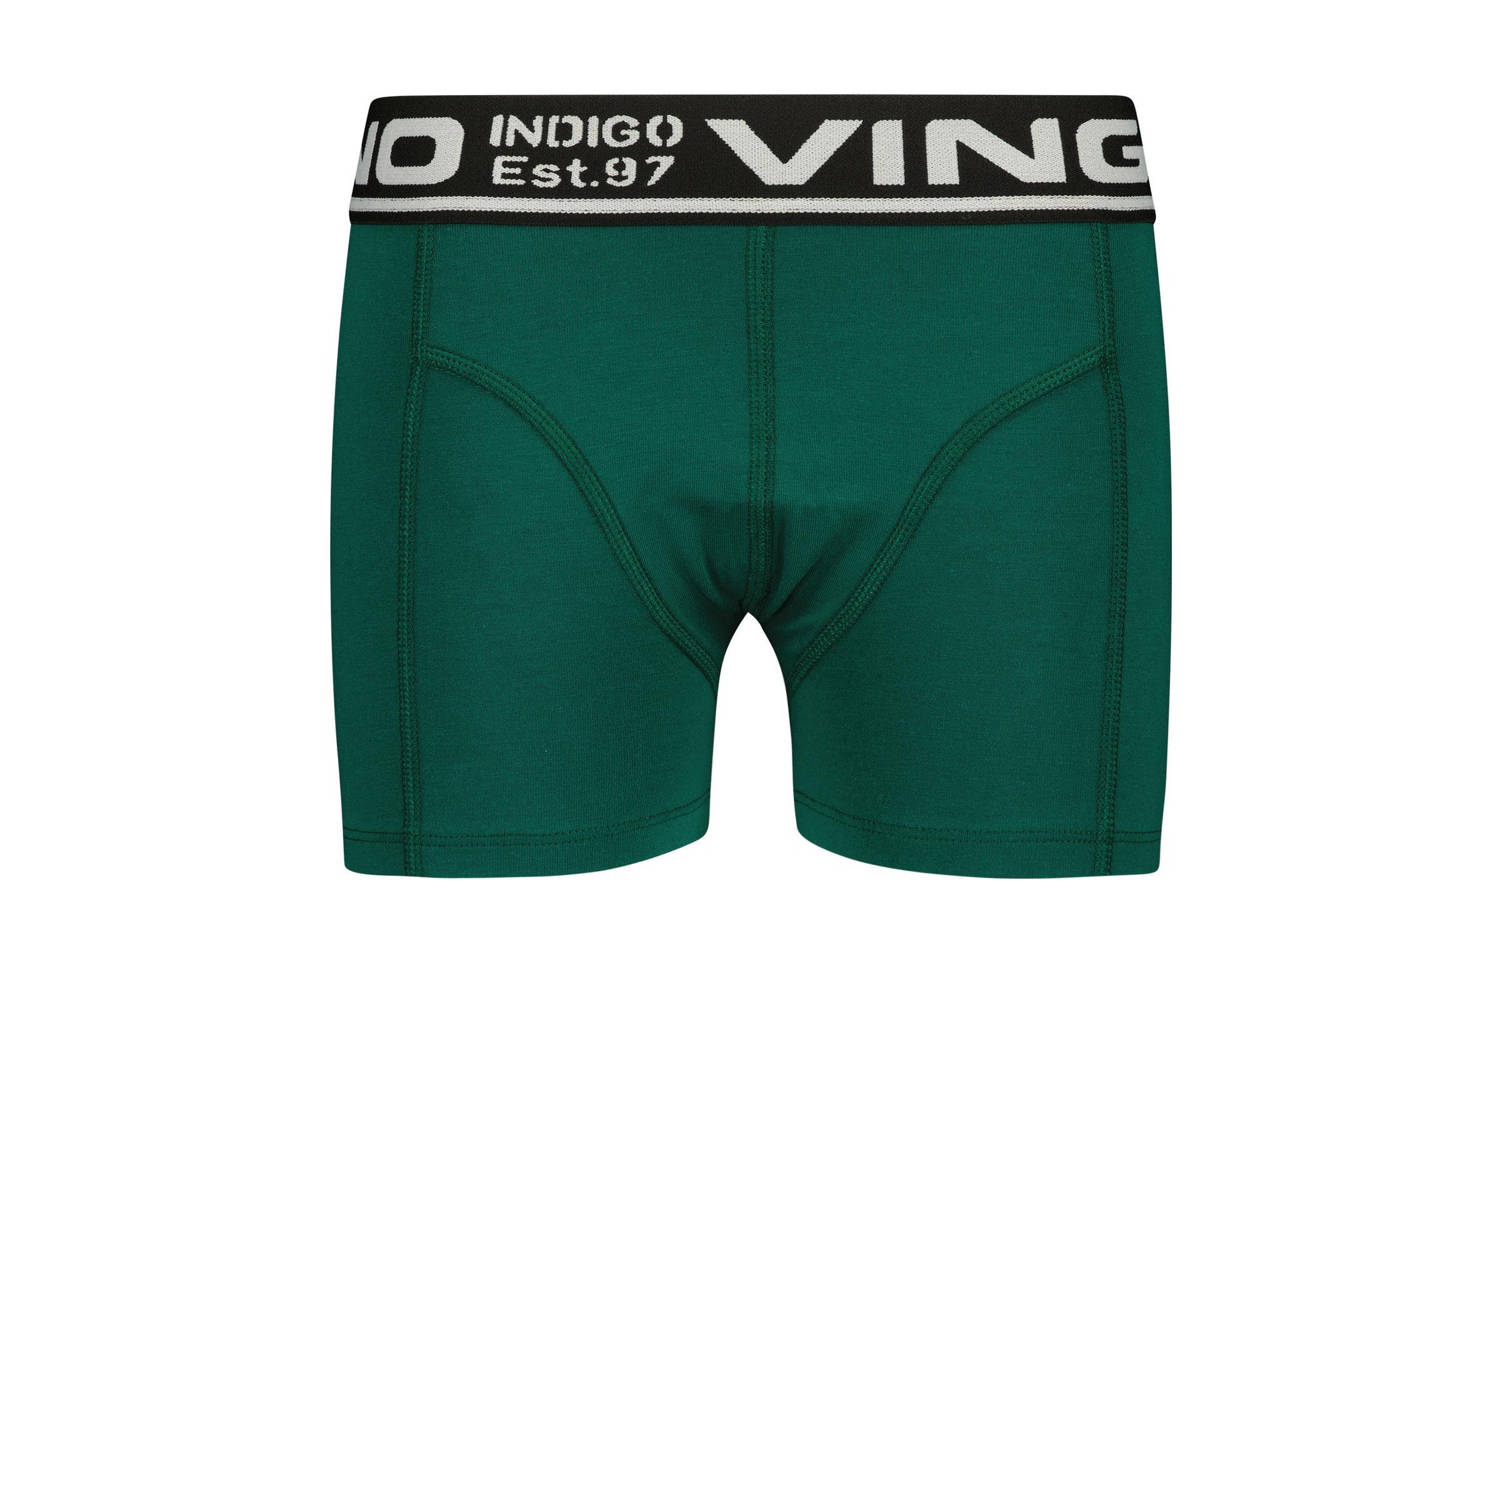 Vingino boxershort Colors set van 5 groen multicolor